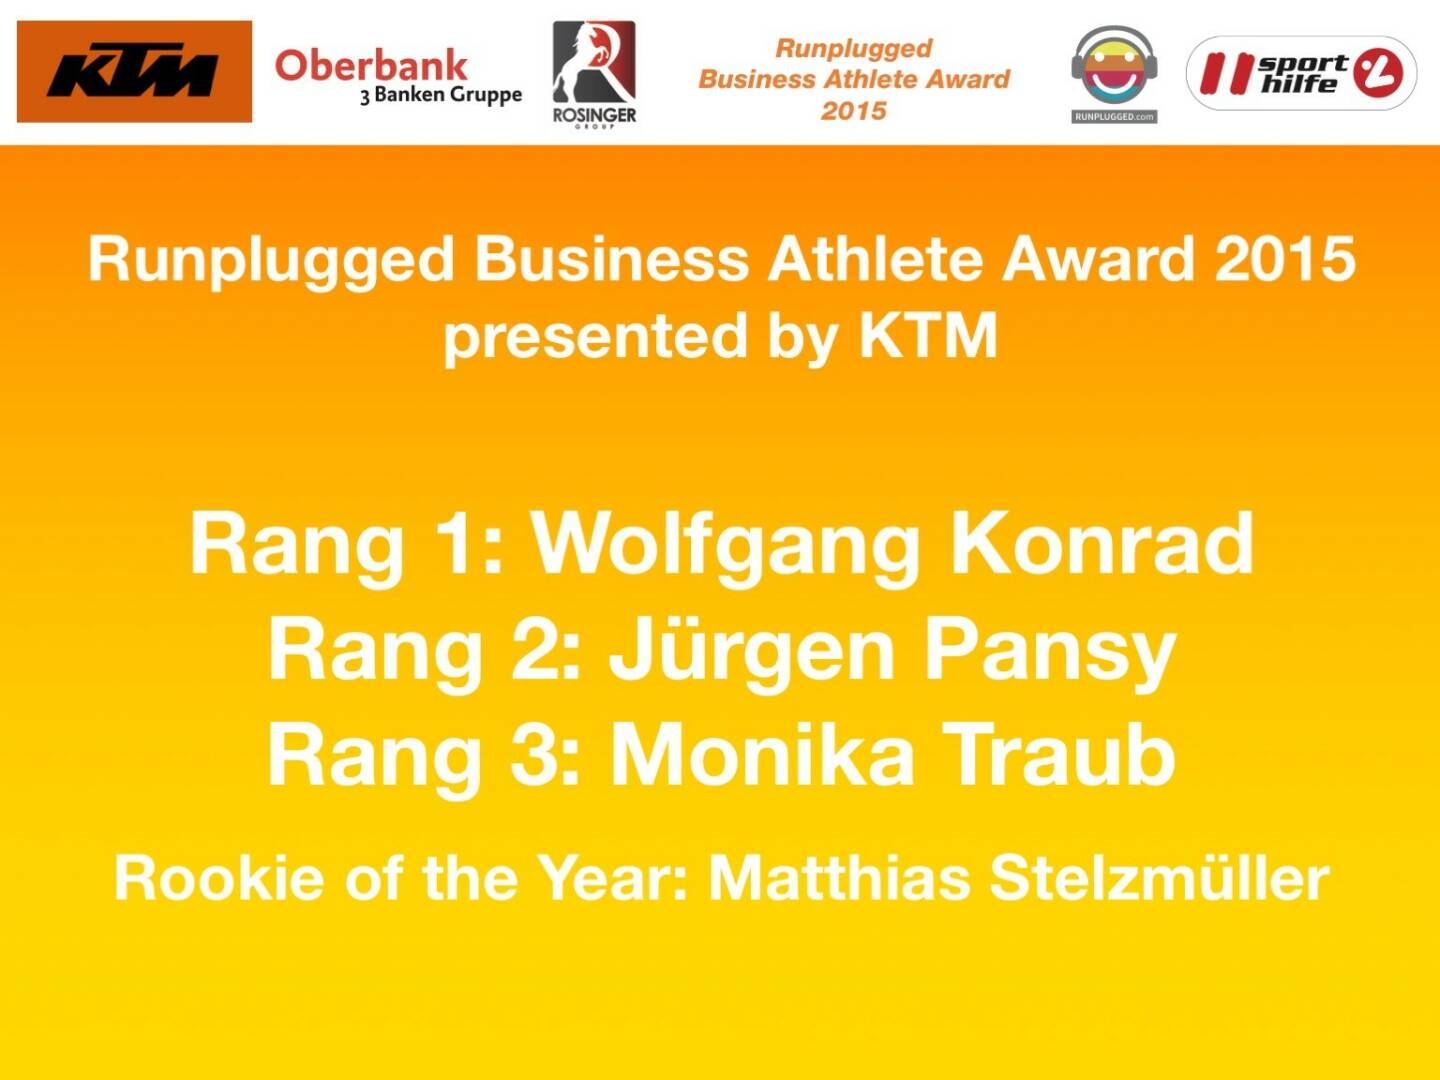 Runplugged Business Athlete Award 2015 presented by KTM Rang 1: Wolfgang Konrad, Rang 2: Jürgen Pansy, Rang 3: Monika Traub, Rookie of the Year: Matthias Stelzmüller